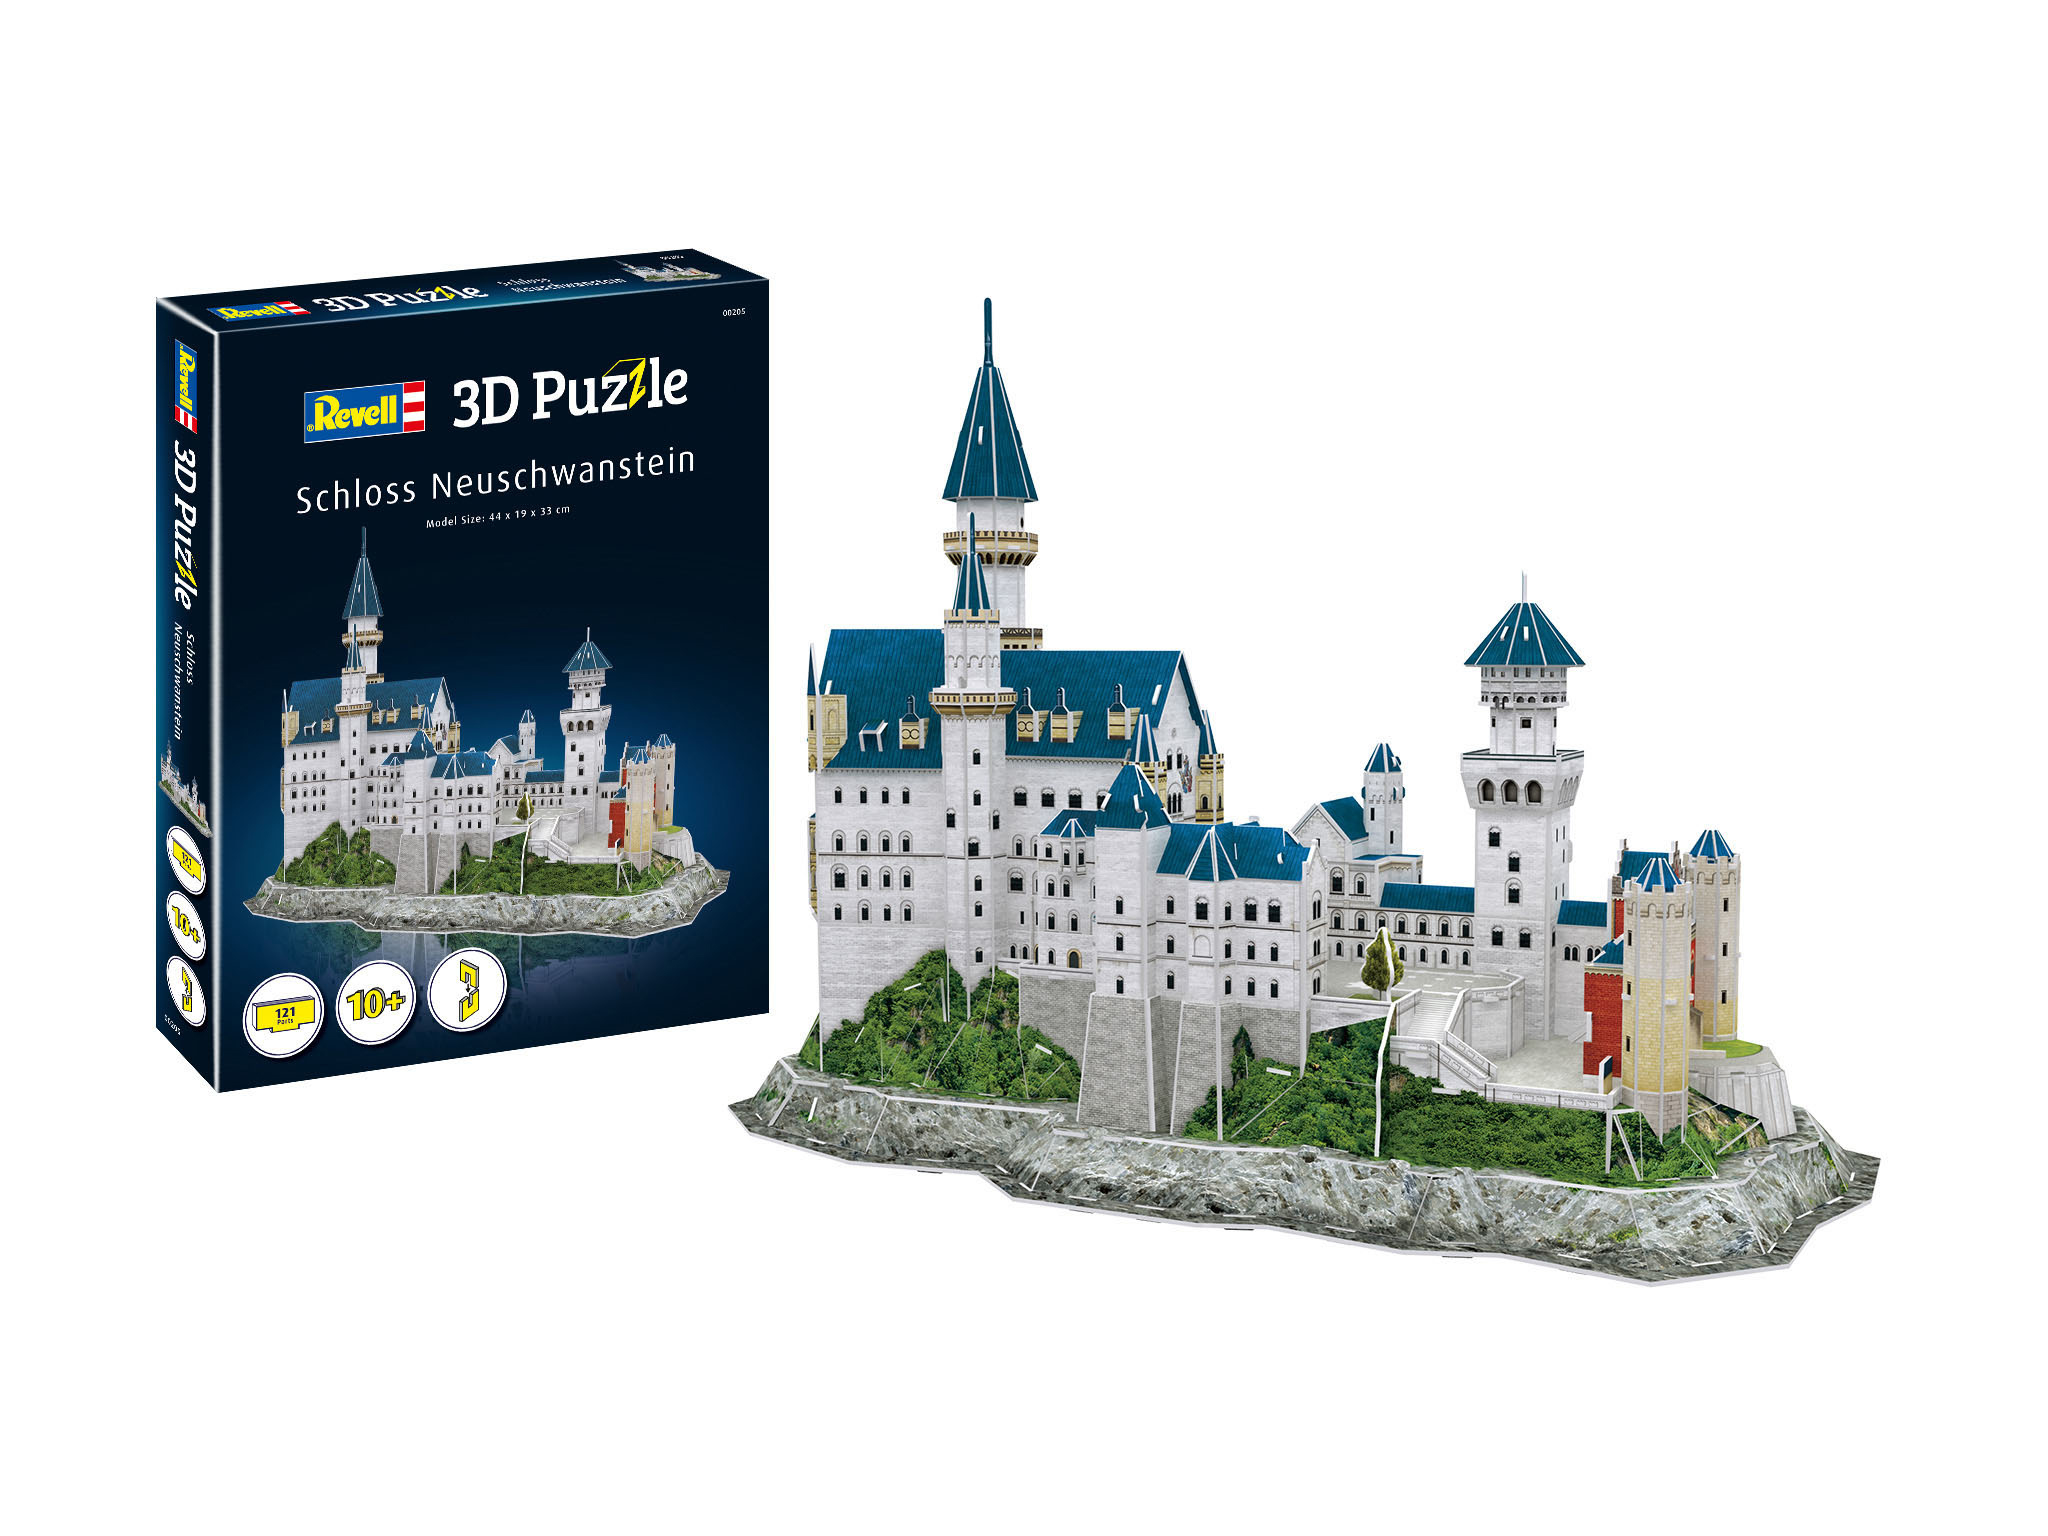 REVELL Schloss Neuschwanstein 3D Mehrfarbig Puzzle